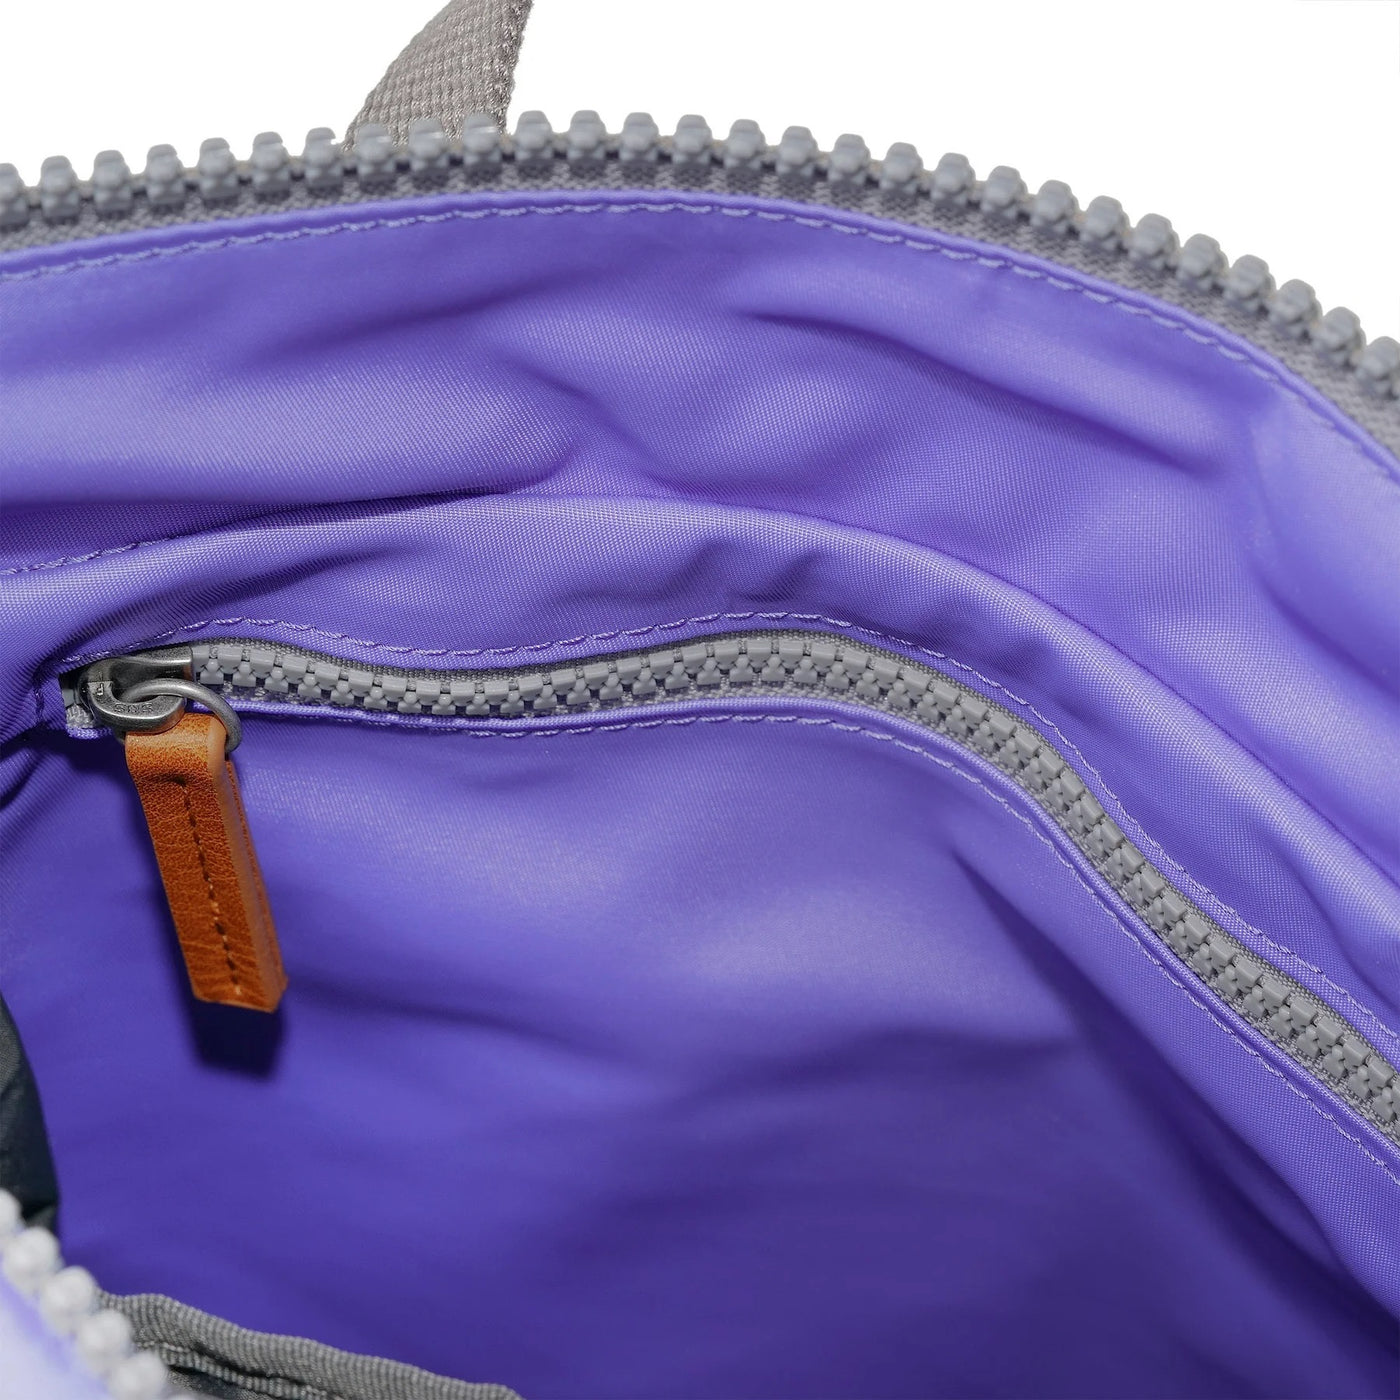 Roka Bantry B Backpack-Sustainable Nylon - Simple Purple